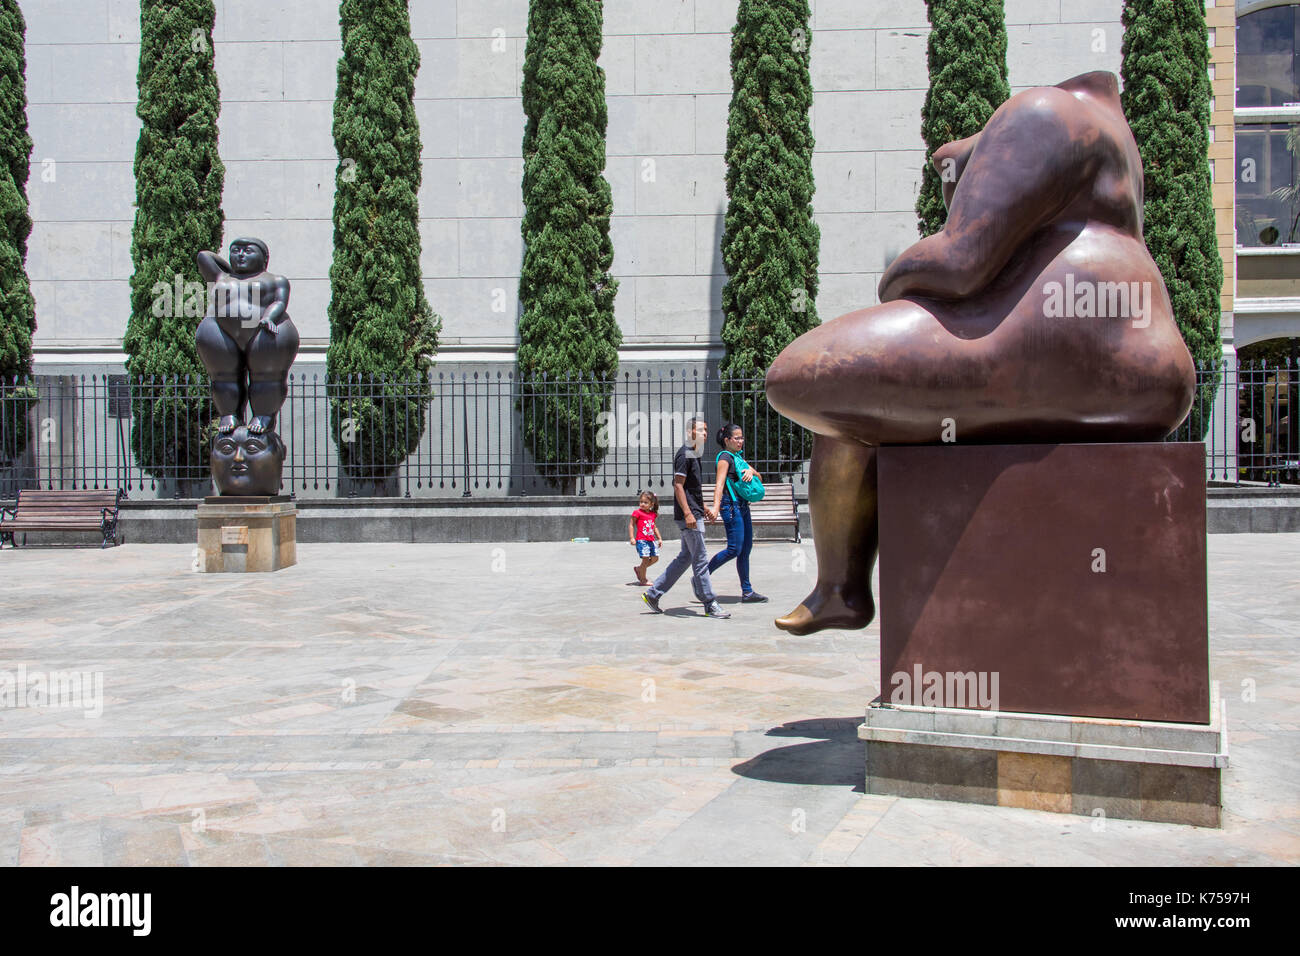 Mujer sentada sculpture, Botero Plaza, Medellin, Colombie Banque D'Images